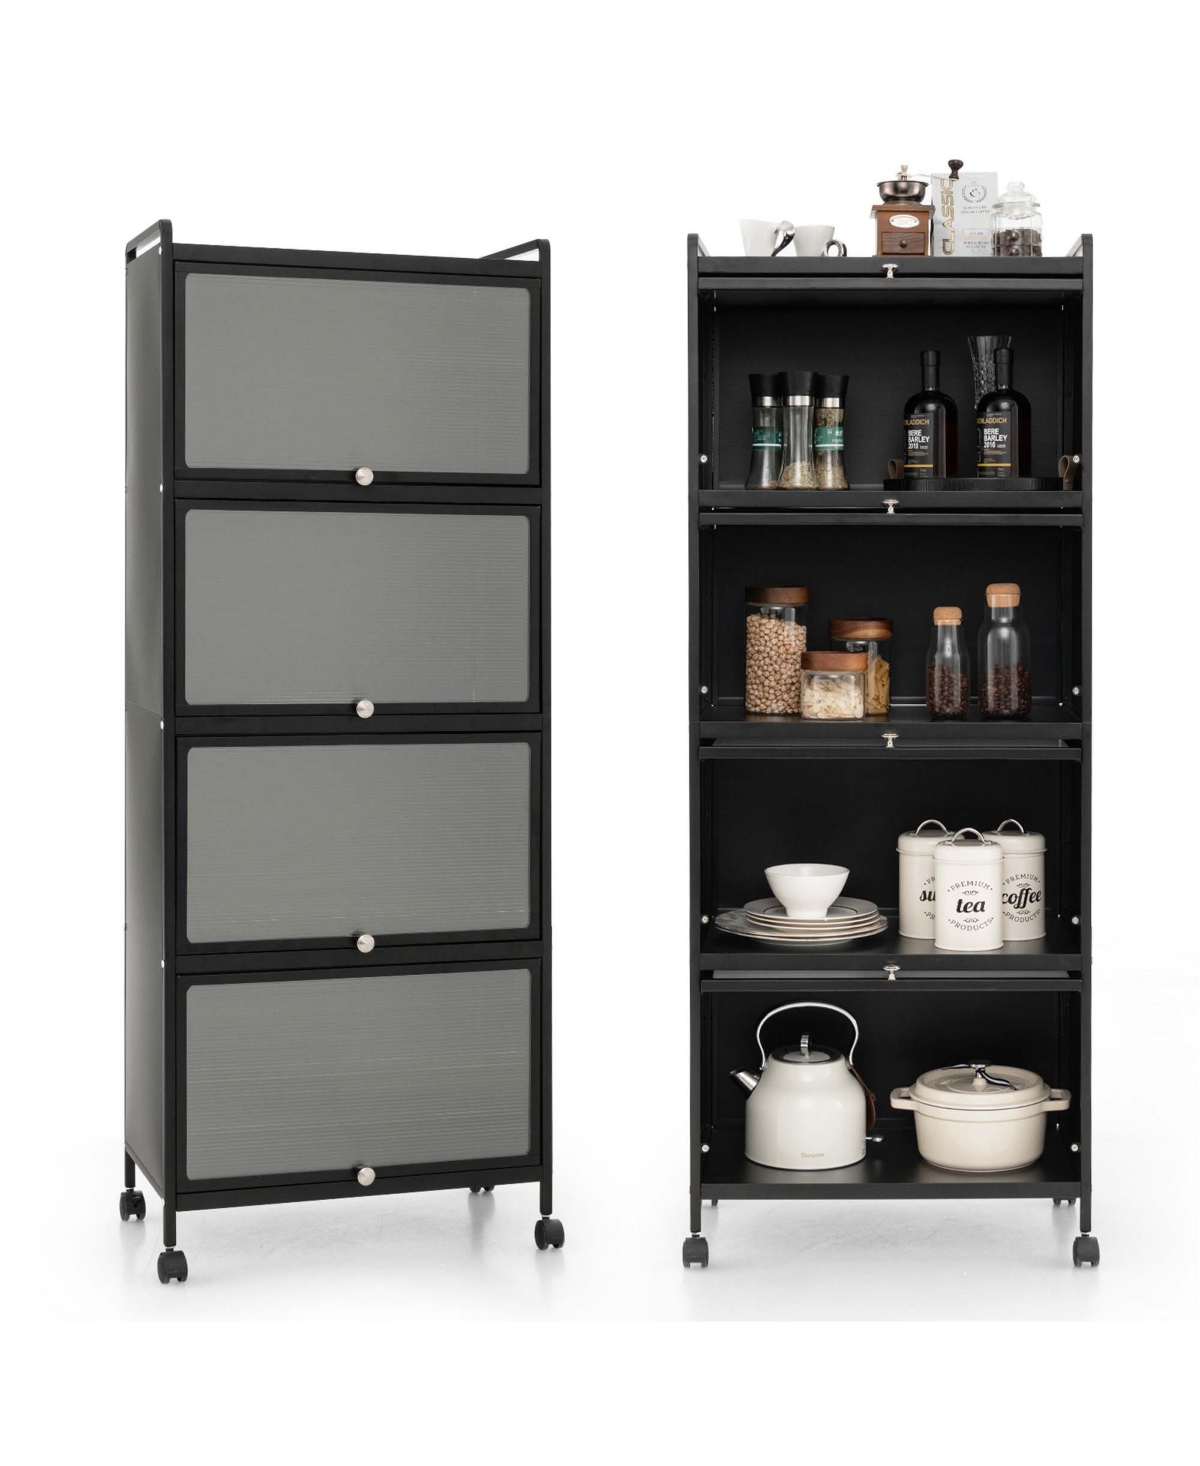 5-Tier Kitchen Baker's Rack Storage Cabinet Mobile Microwave Stand Flip-up Doors - Black